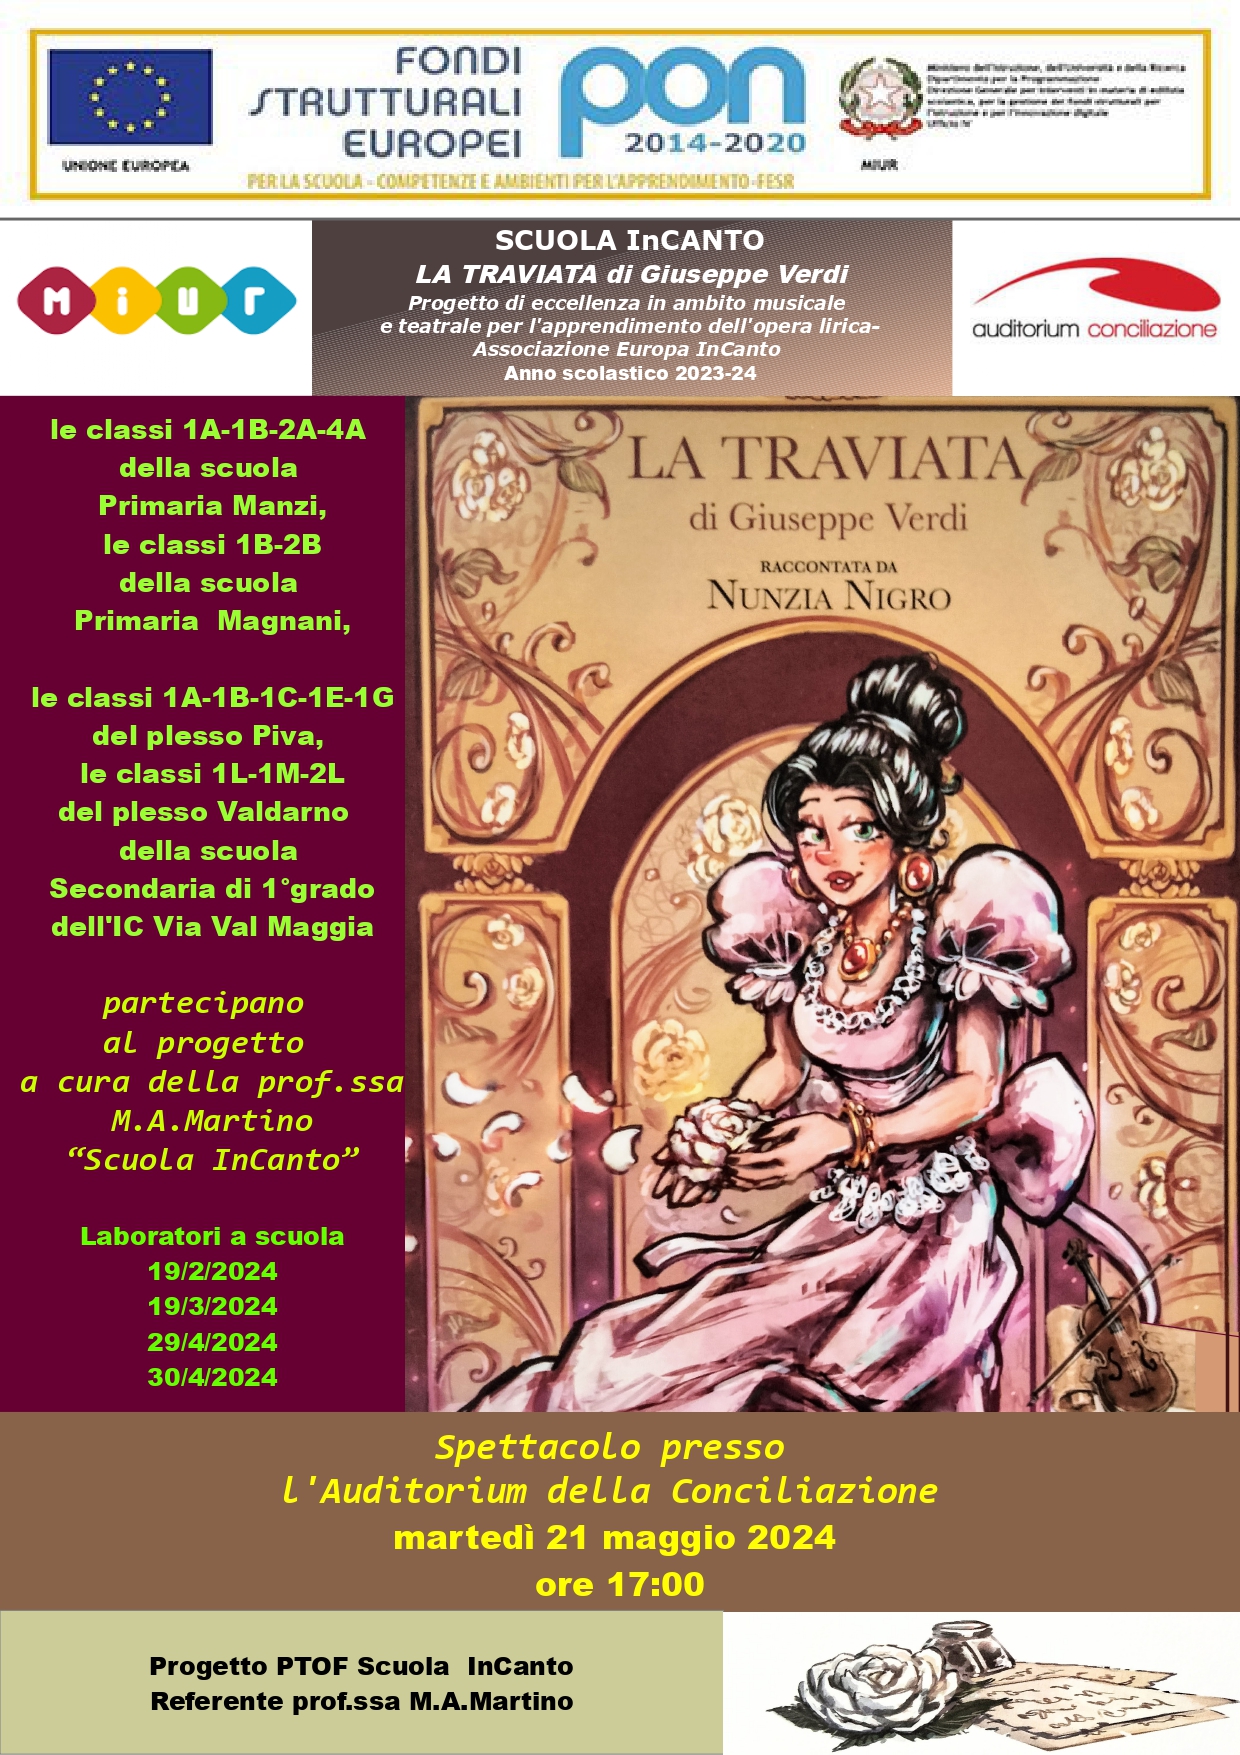 locandina traviata_page-0001.jpg